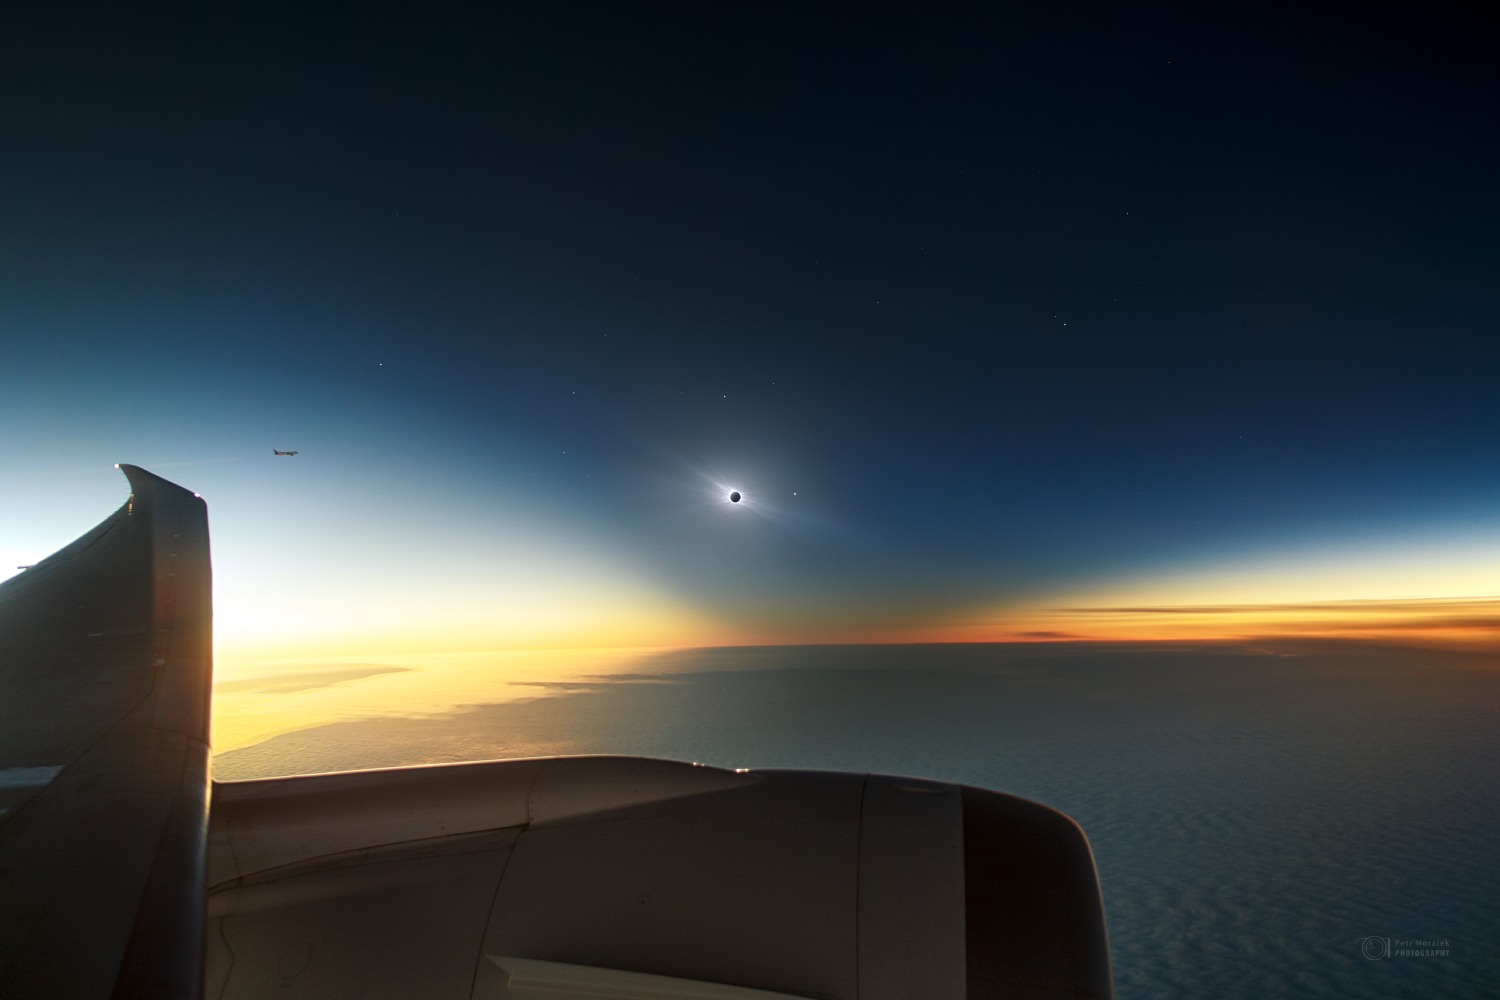 solar eclipse of december 4, 2021